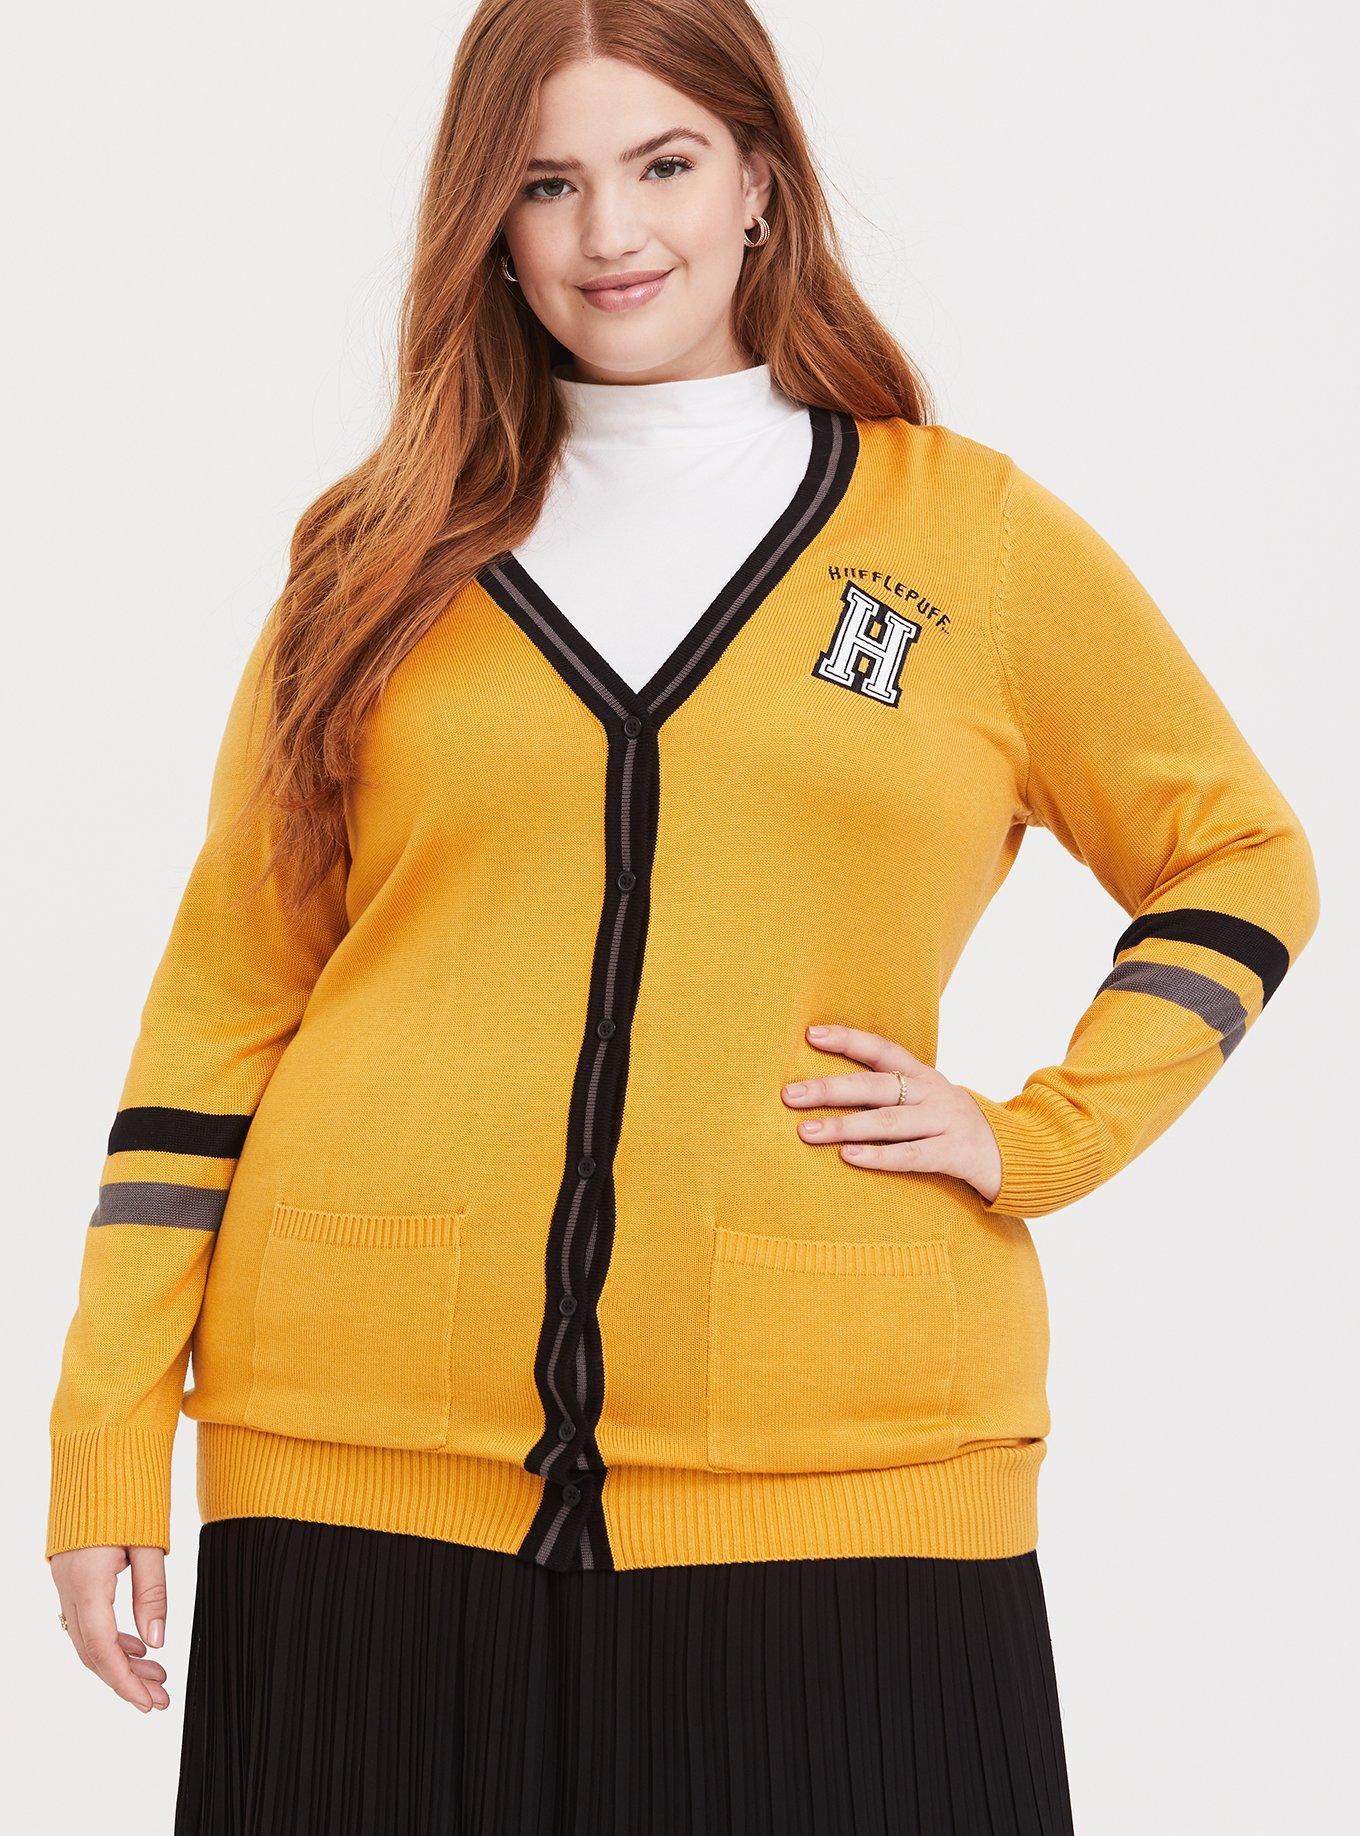 Harry Potter Women's Plus 3X Hufflepuff Checkered Cardigan Sweater